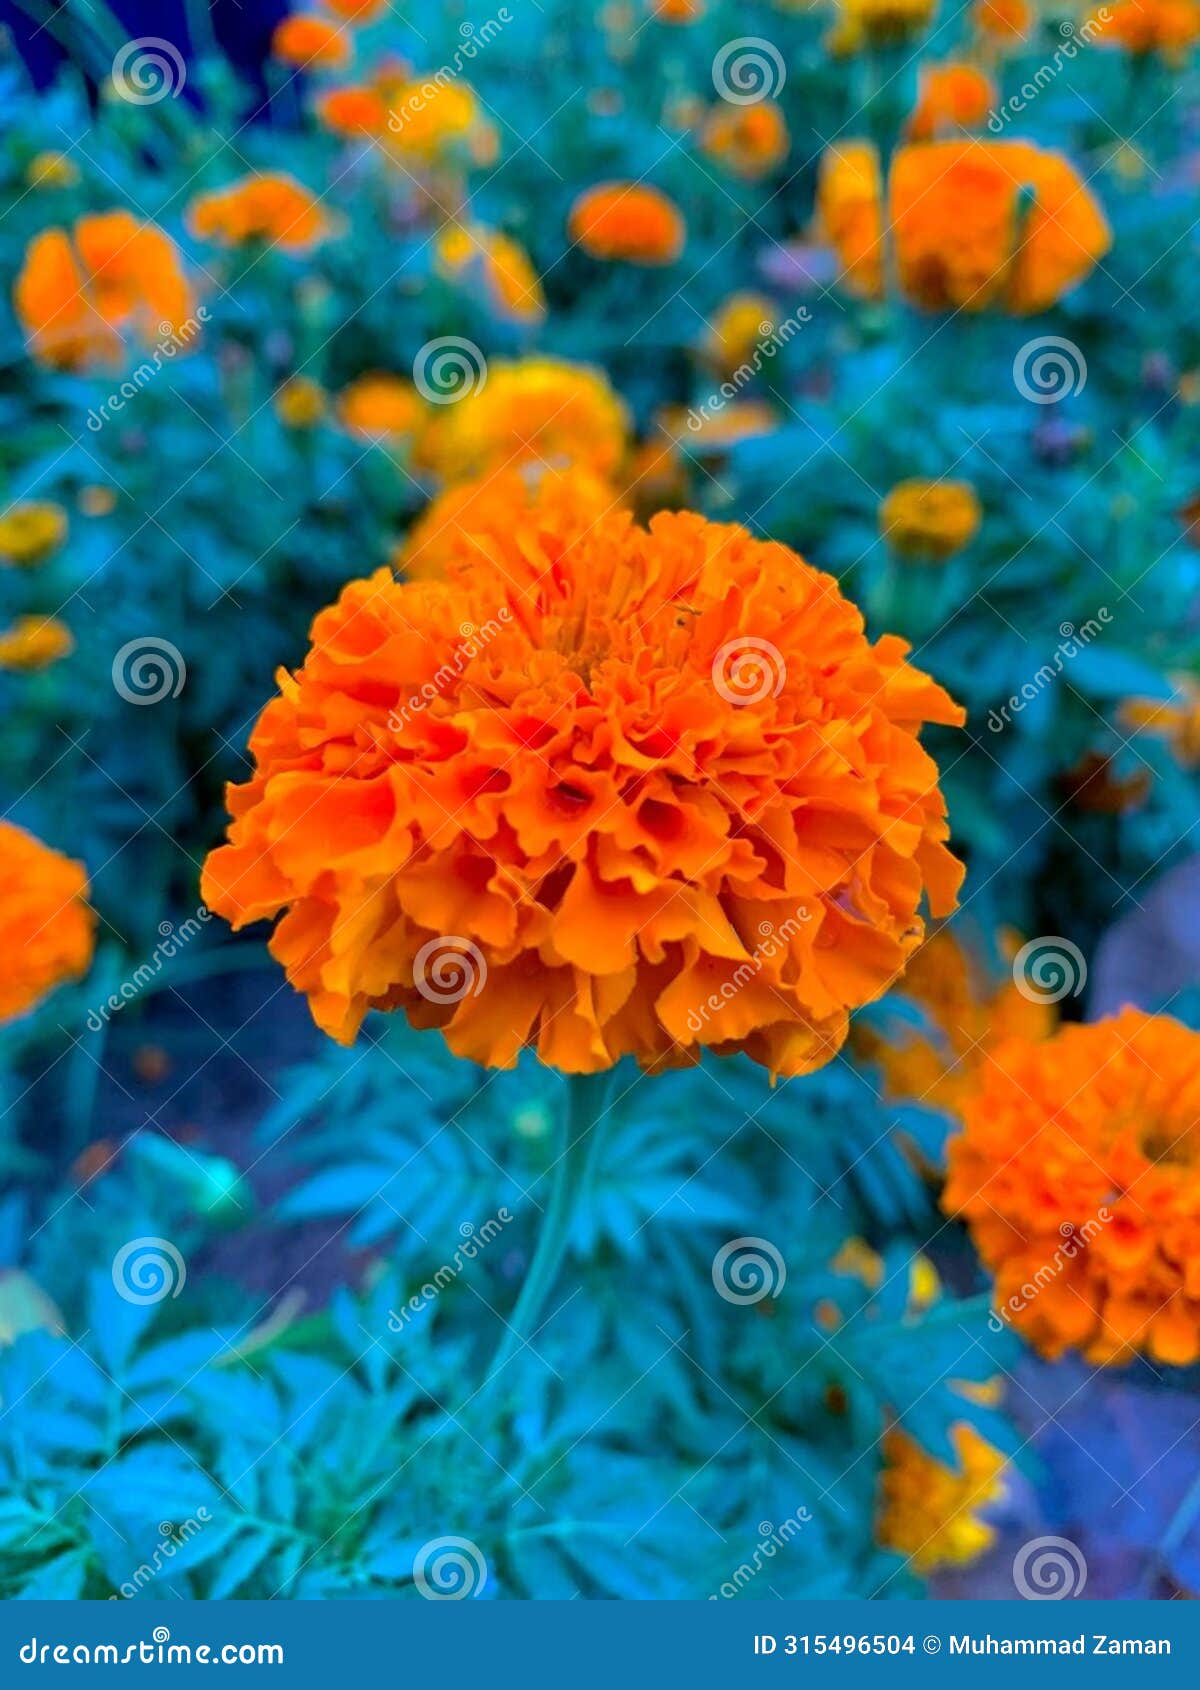 orange indian dalia